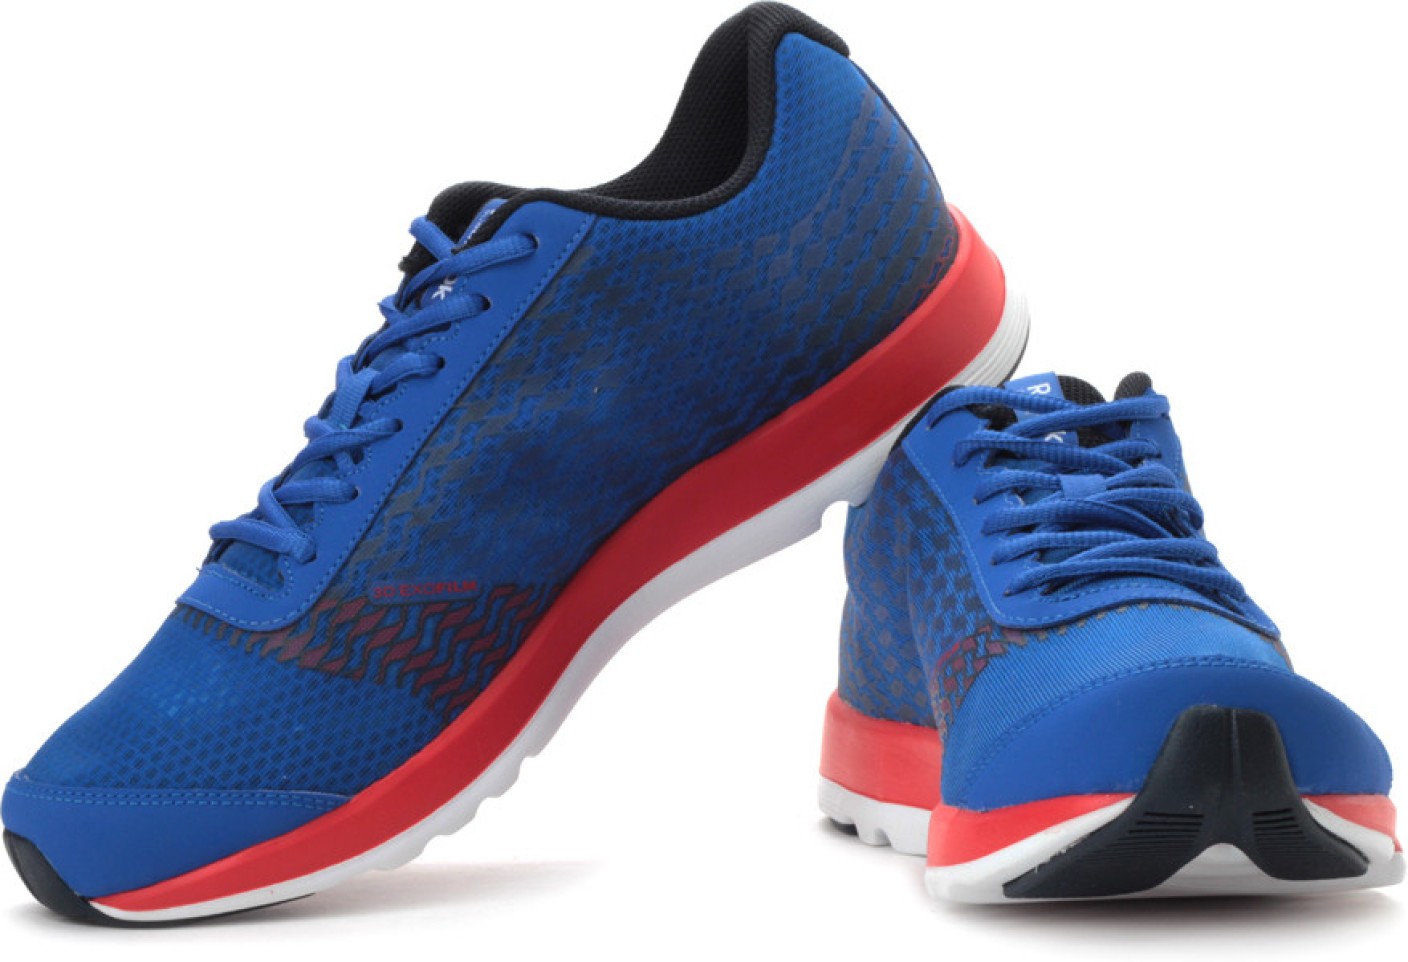 Reebok Sublite Duo Instinct Running Shoes For Men - Buy Blue Color ...